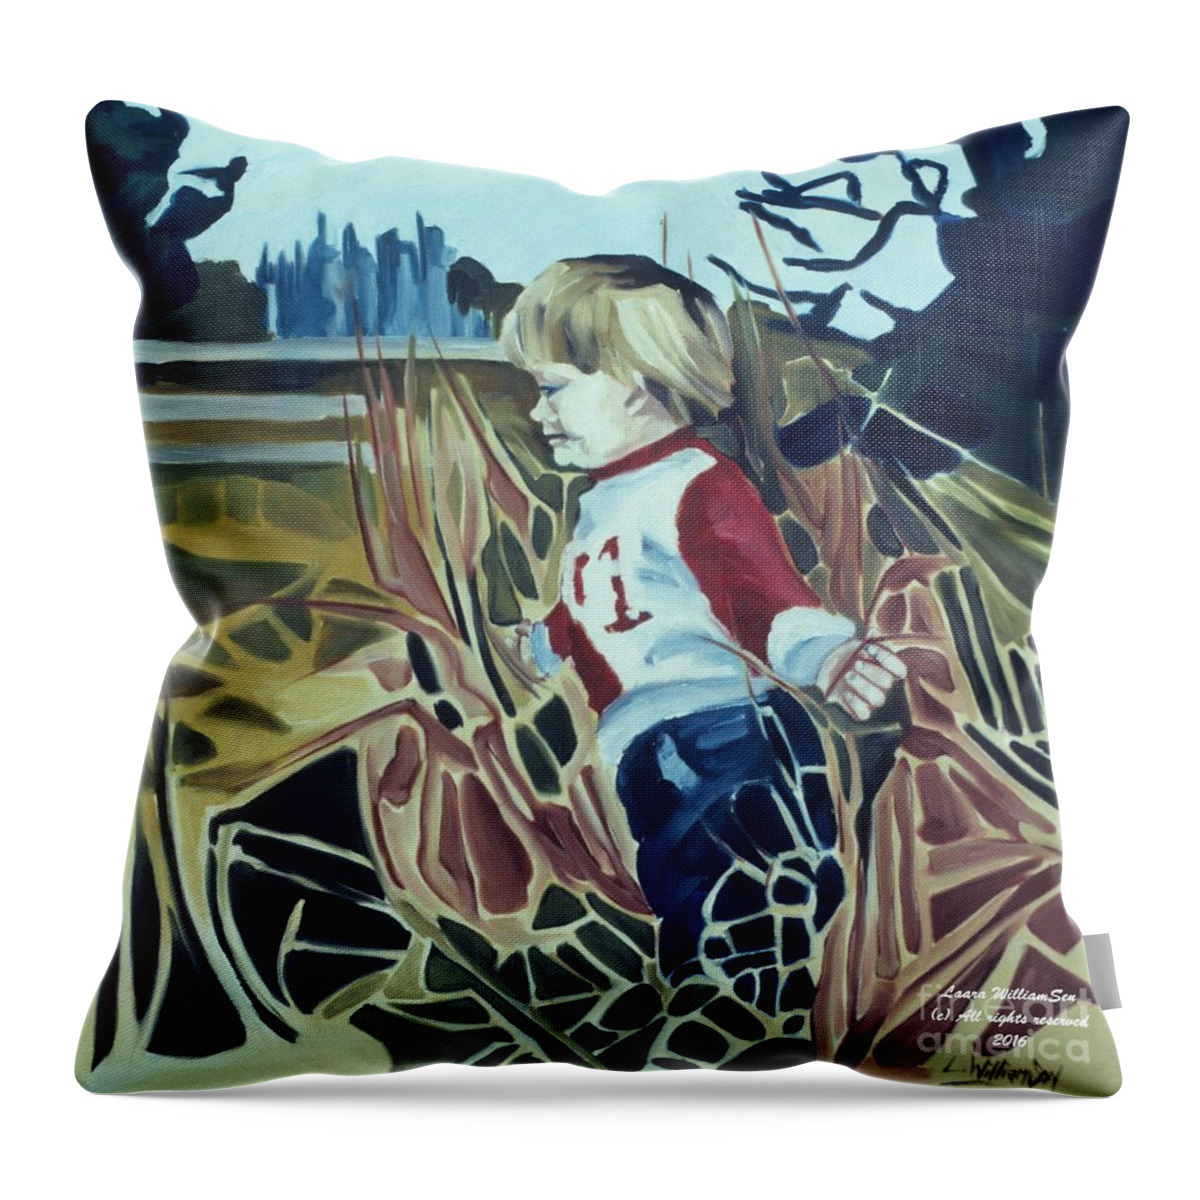 Children Throw Pillow featuring the painting Boy In Grassy Field by Laara WilliamSen